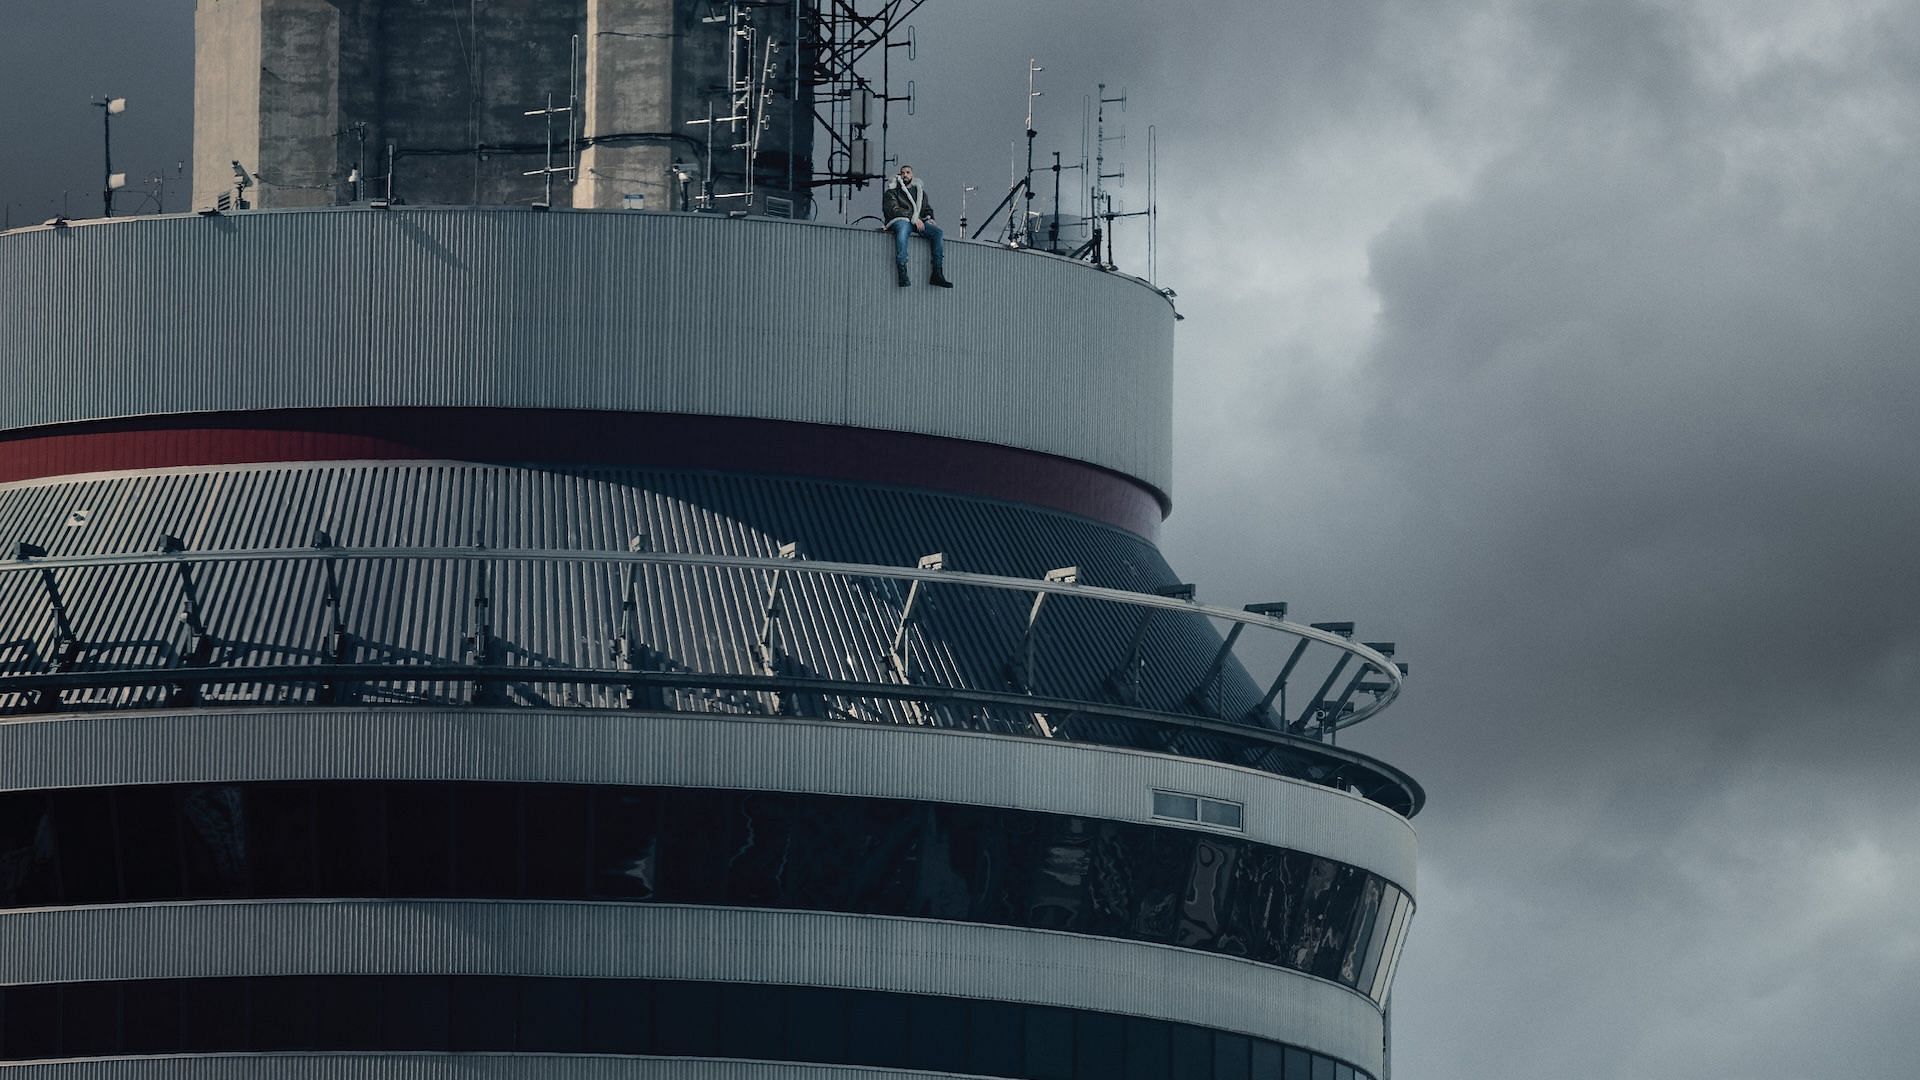 The official album cover art for Drake